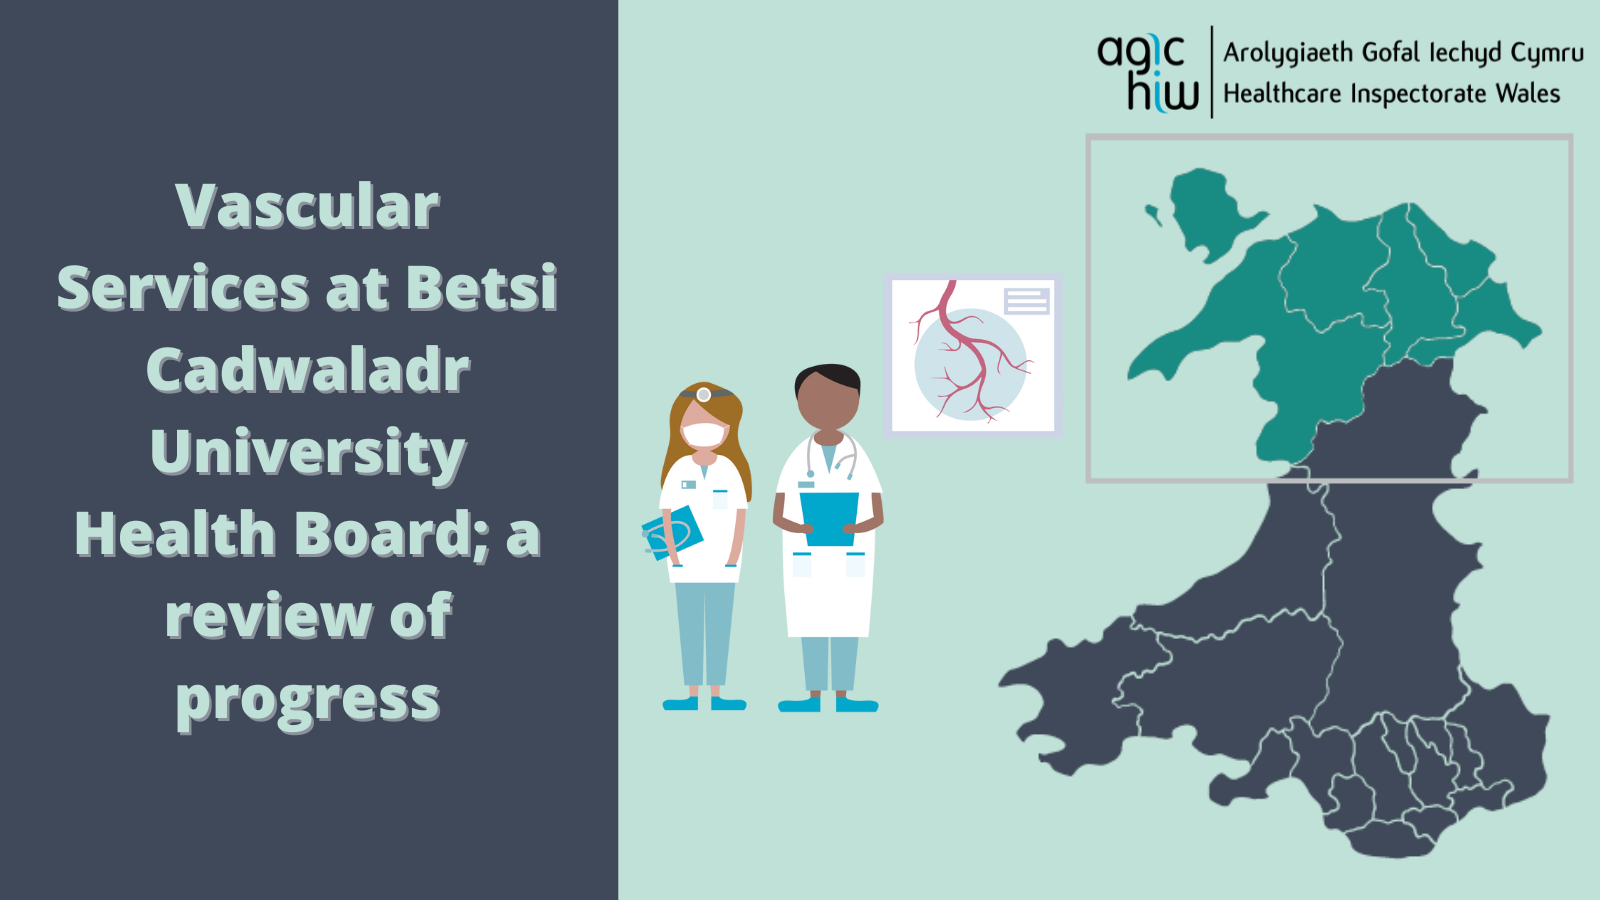 Vascular Services at Betsi Cadwaladr University Health Board; a review of progress